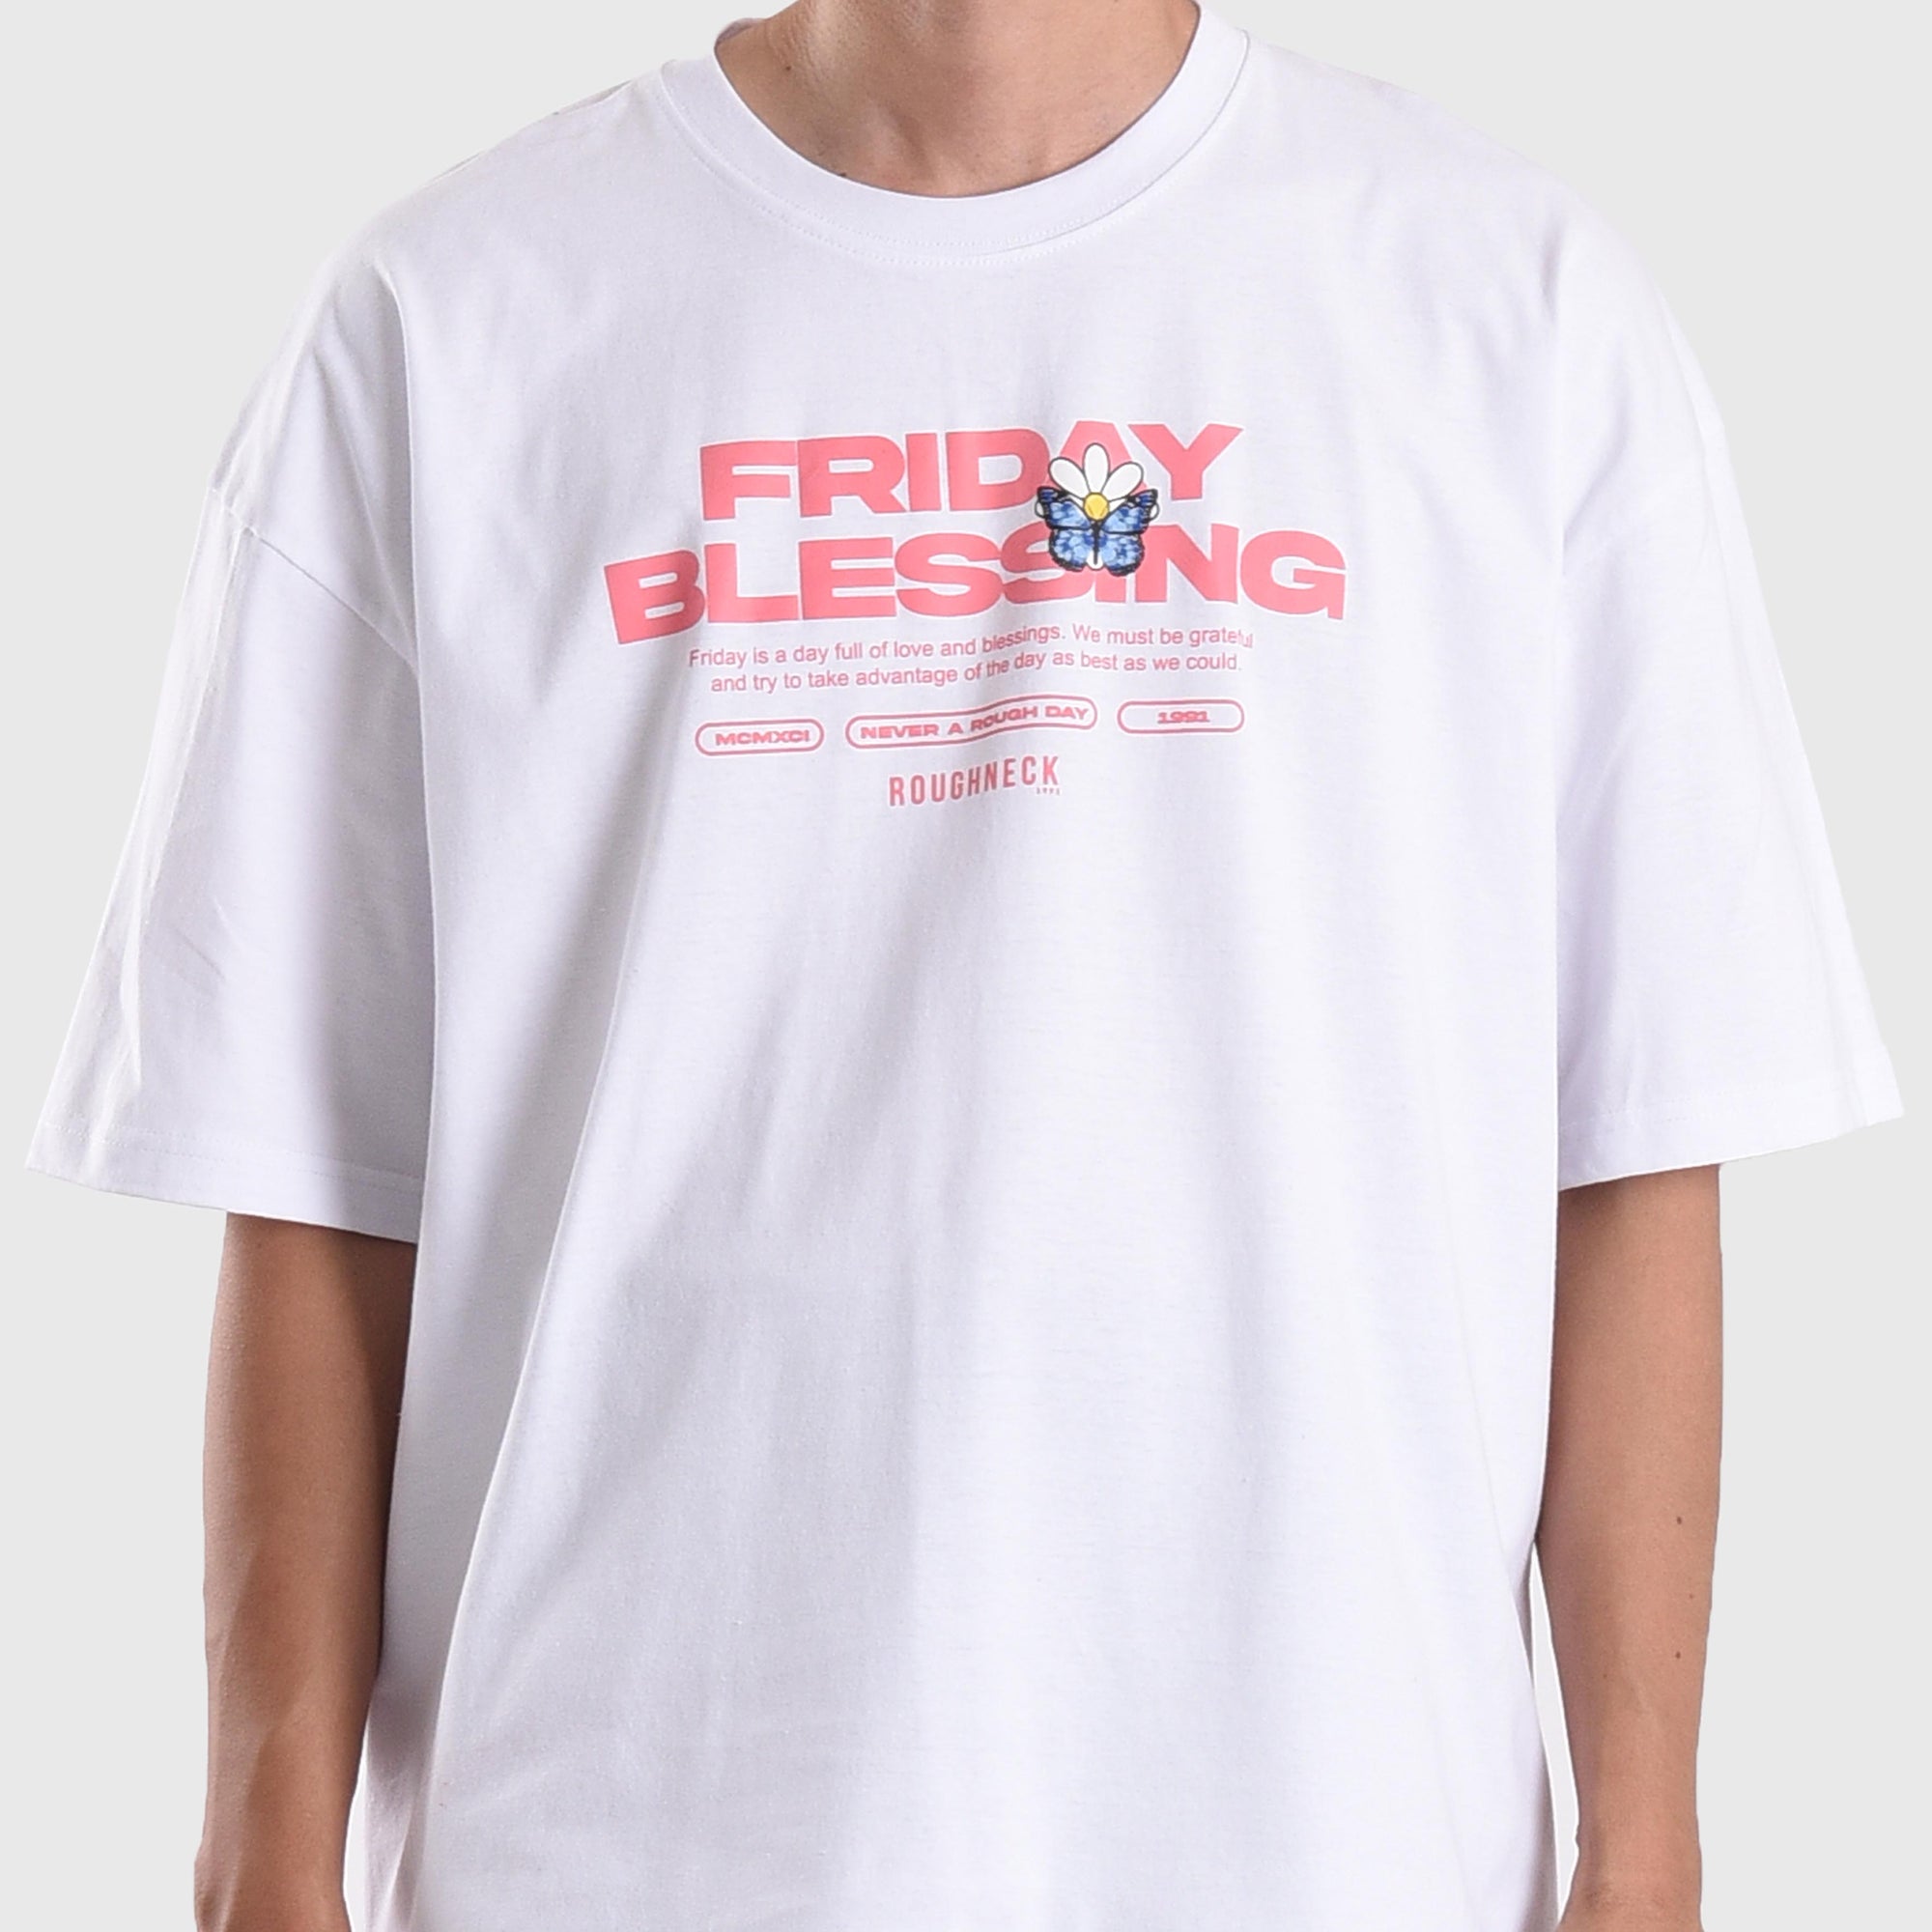 OT142 White Friday Blessing Oversize Tshirt